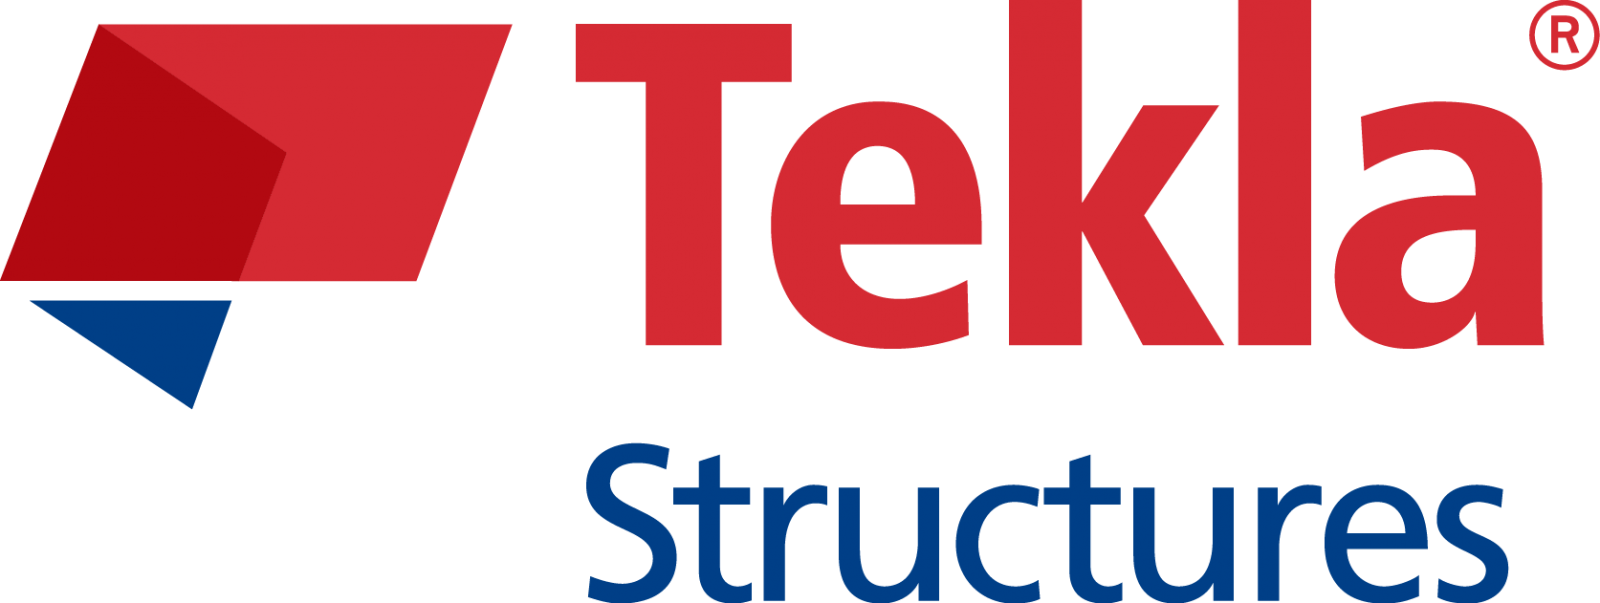 logo Tekla